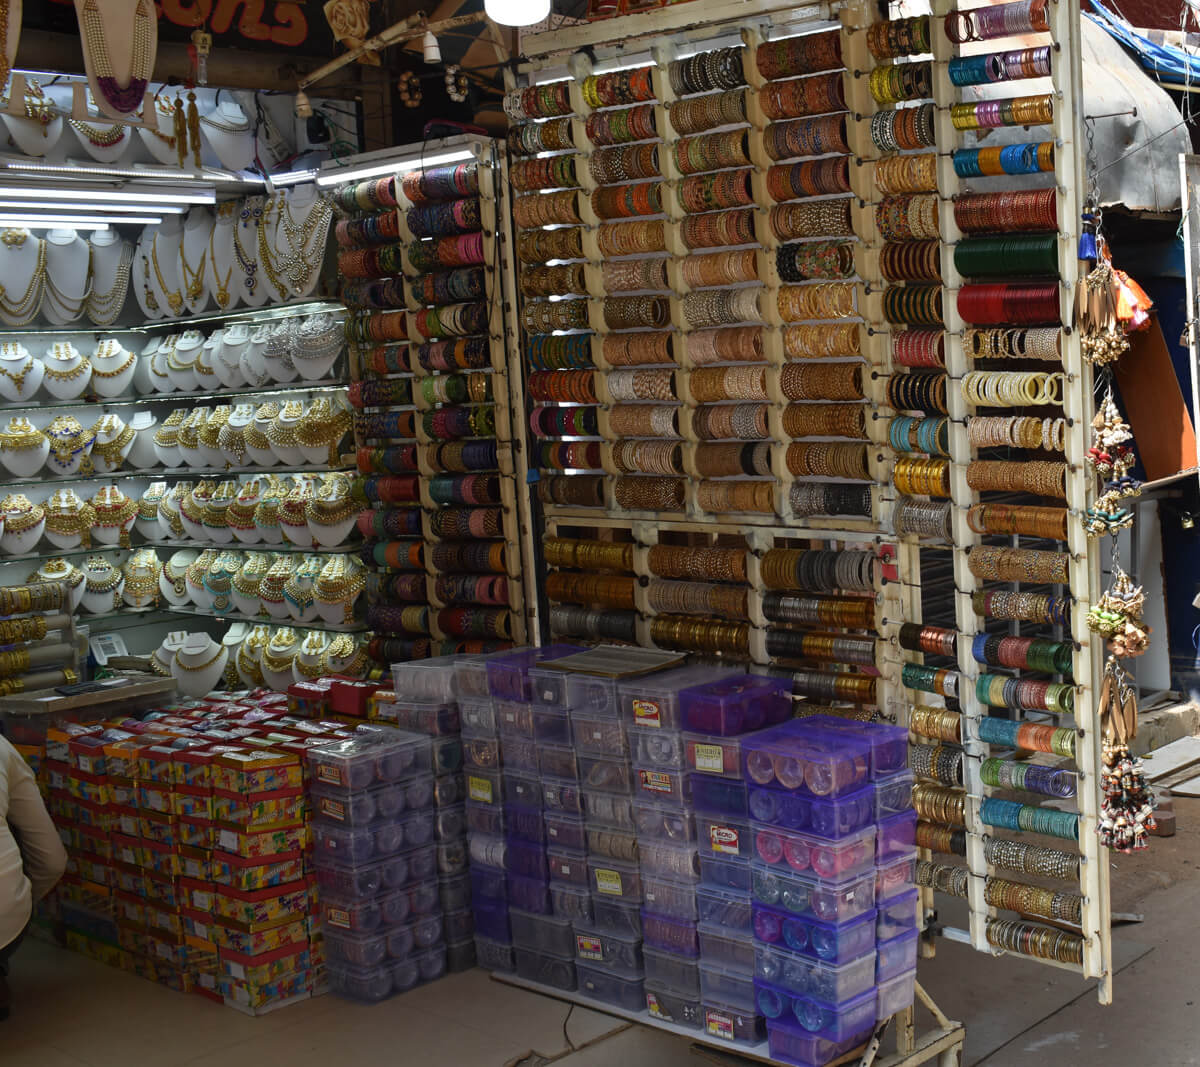 bangalore city images of shops selling bangles